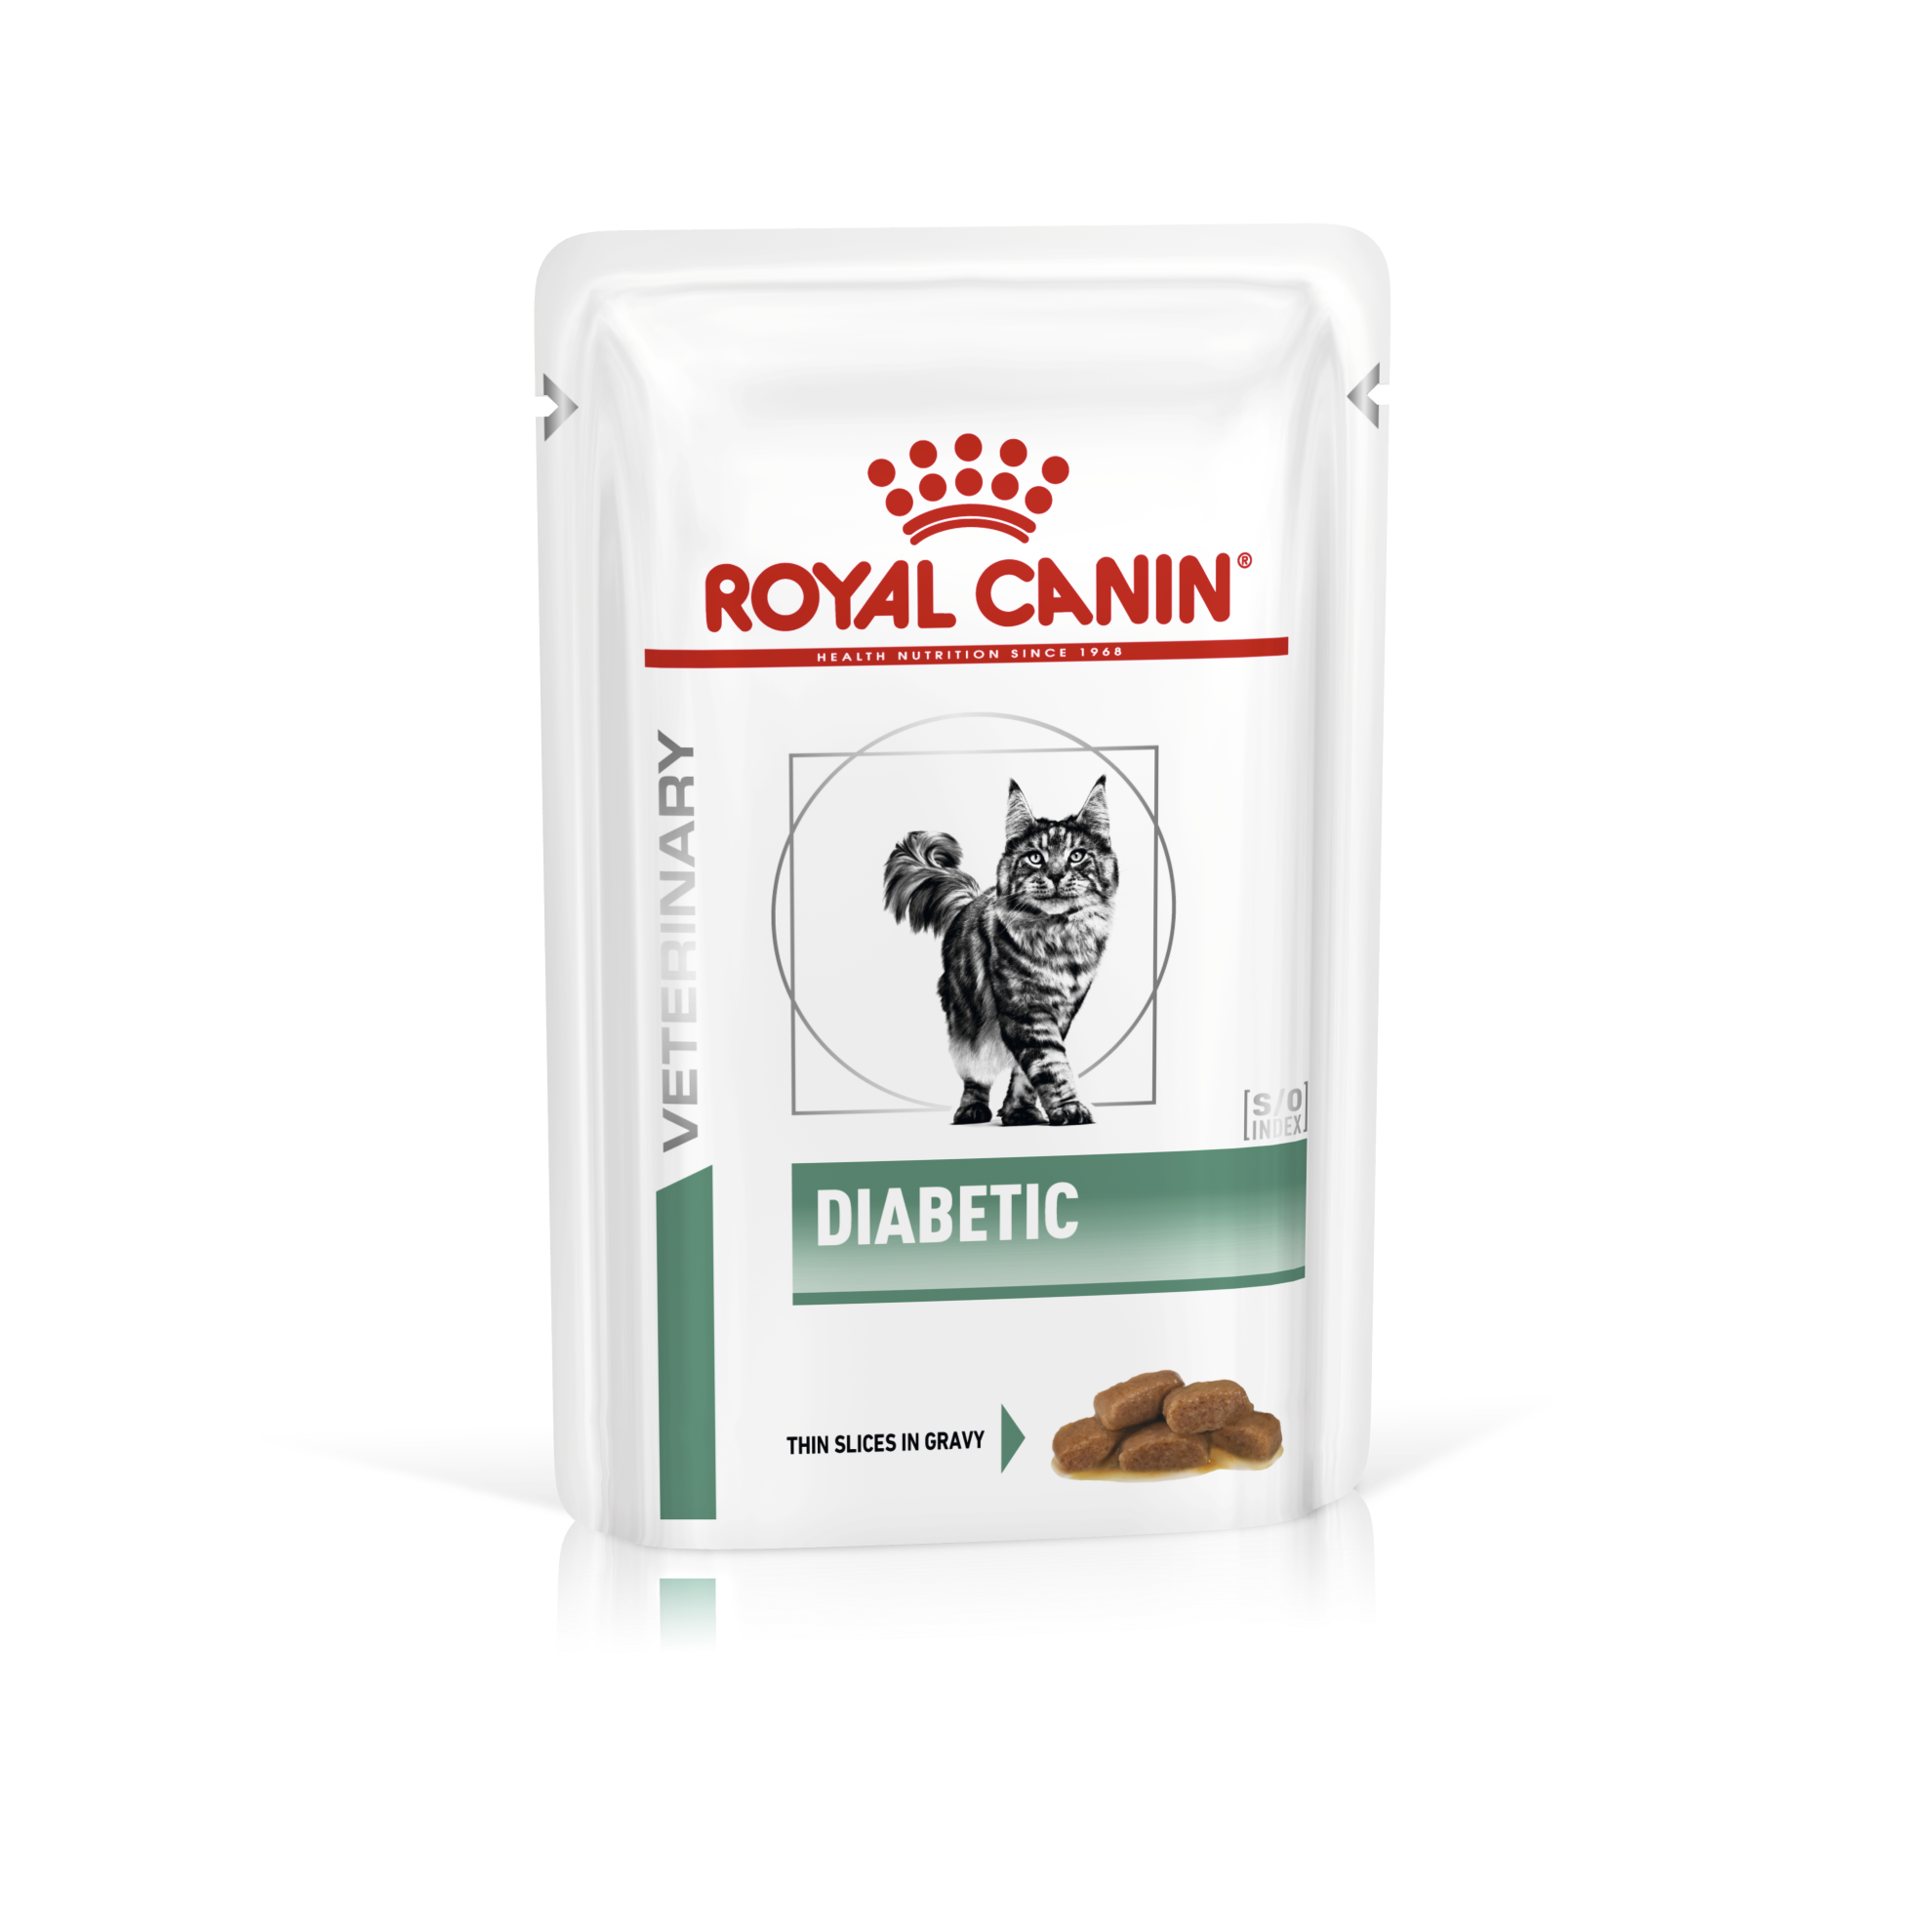 Royal Canin Diabetic Cat Food Wet